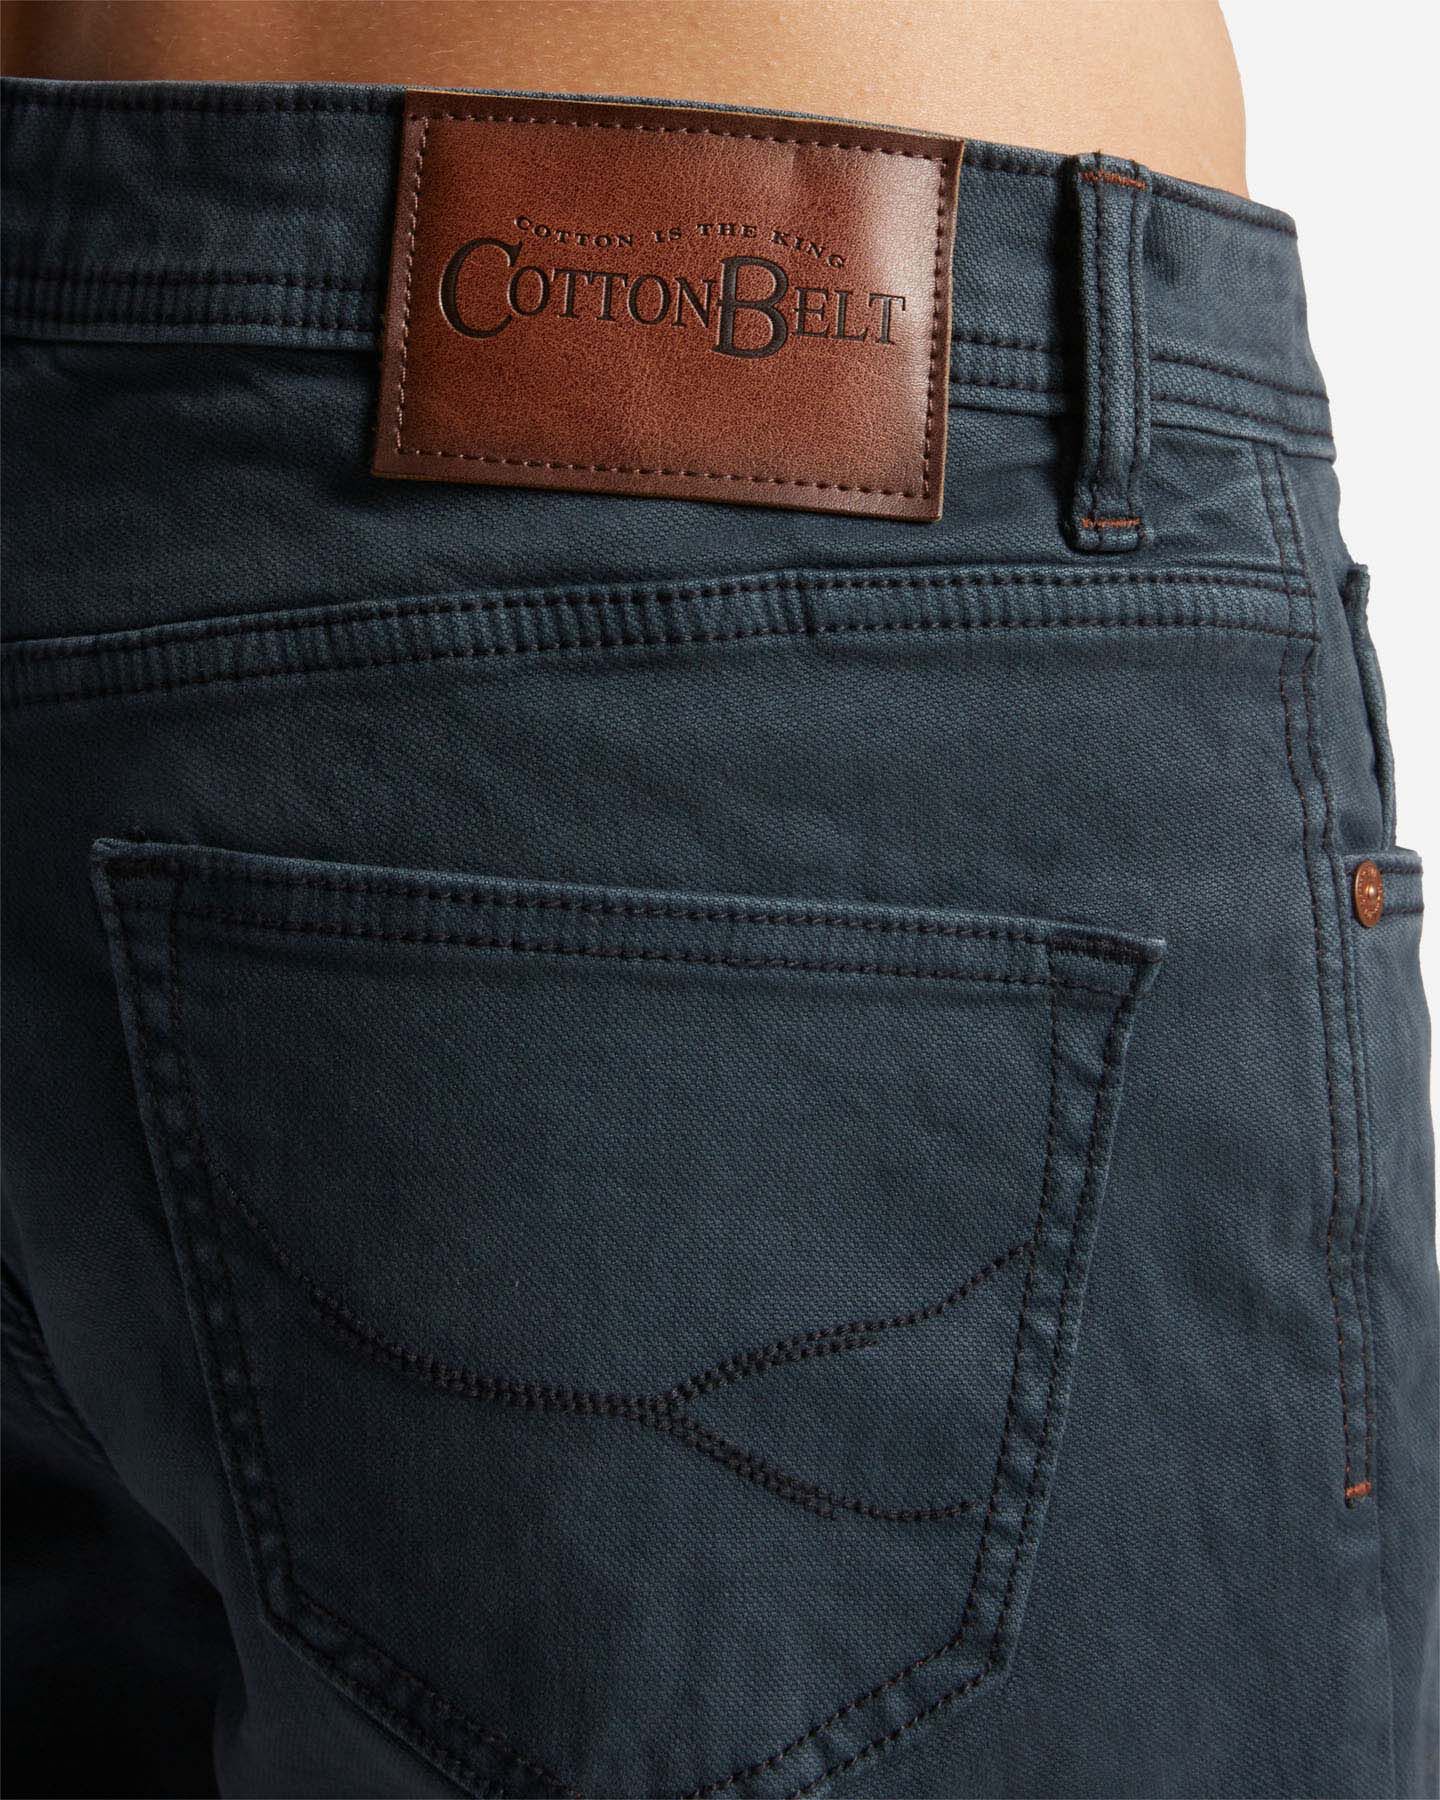  Pantalone COTTON BELT 5 POCKET M S4126999|1020|32 scatto 3